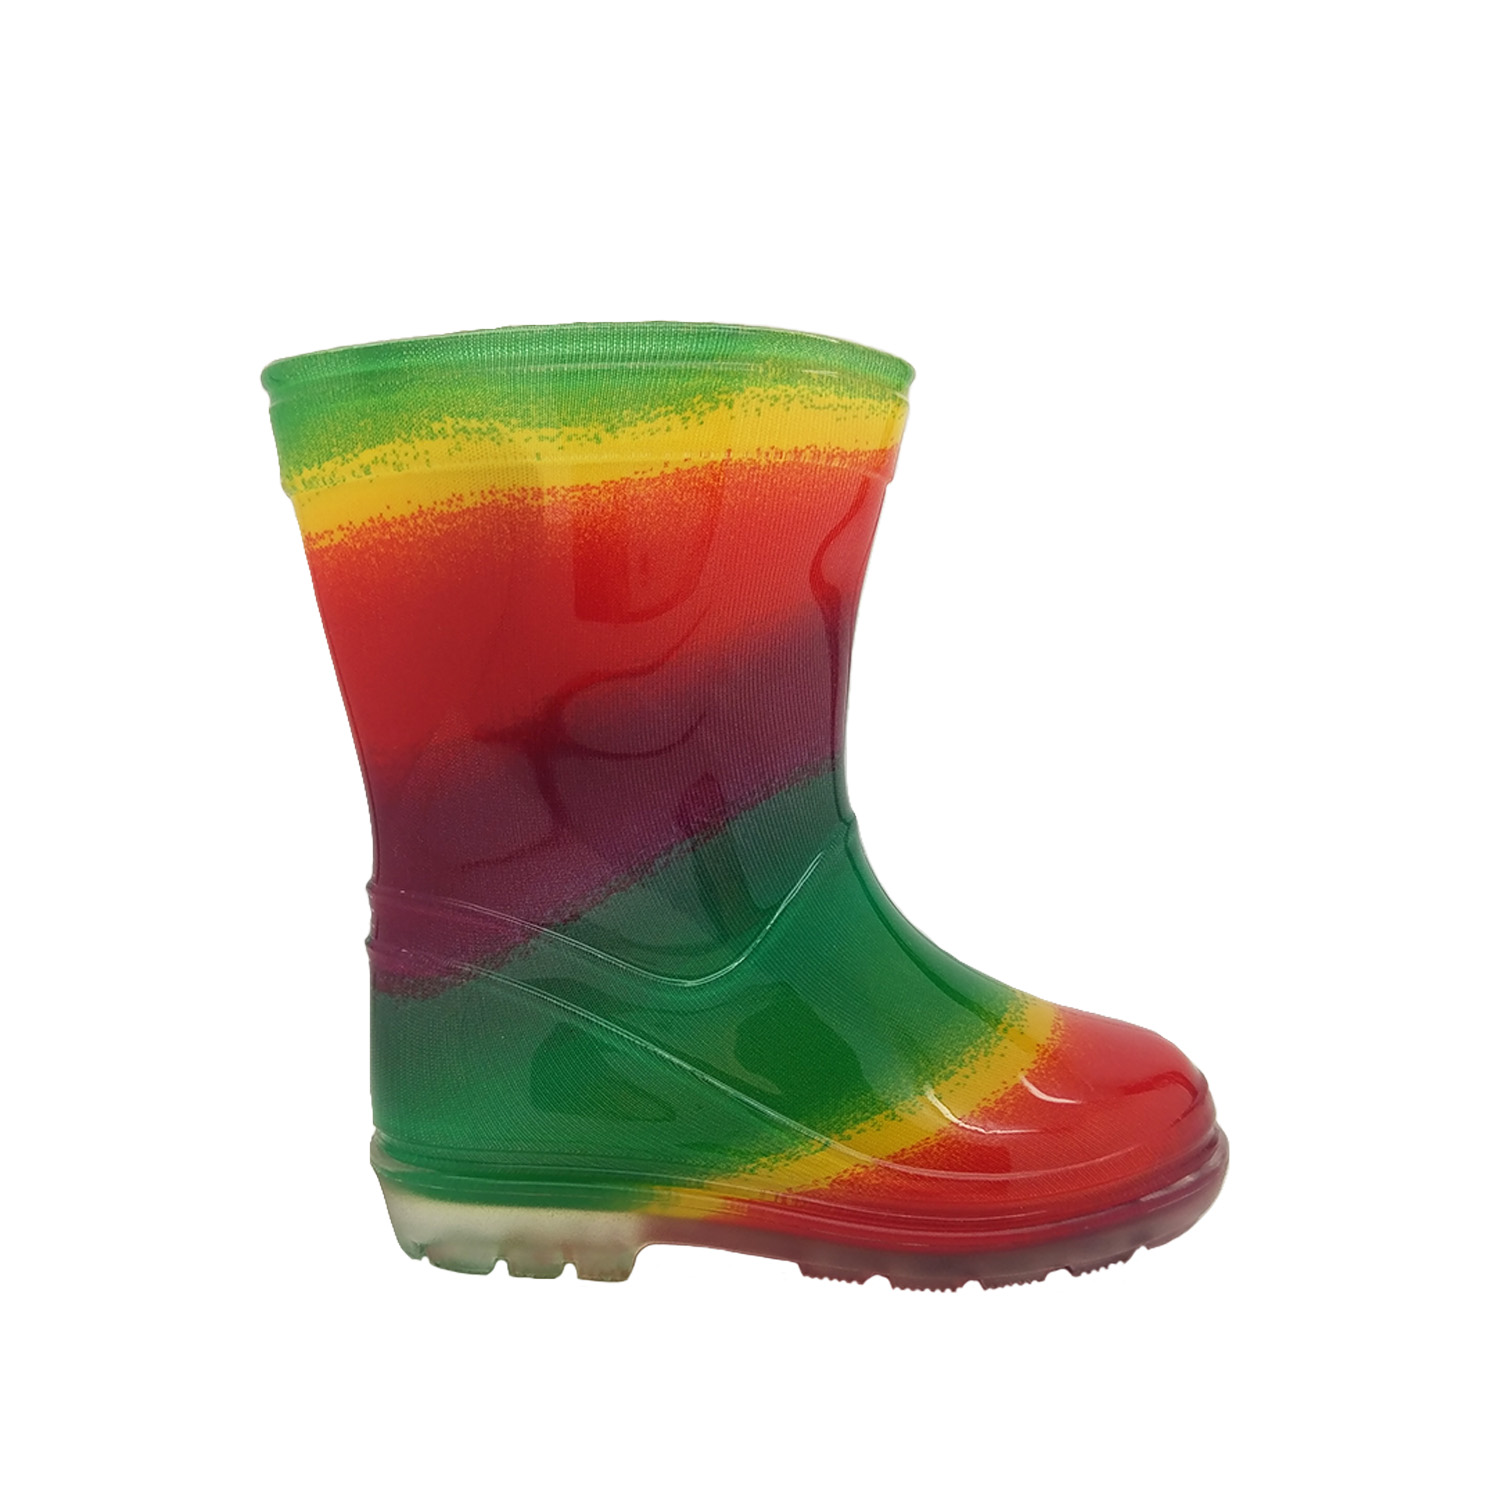 Buy > childrens rain boots > in stock